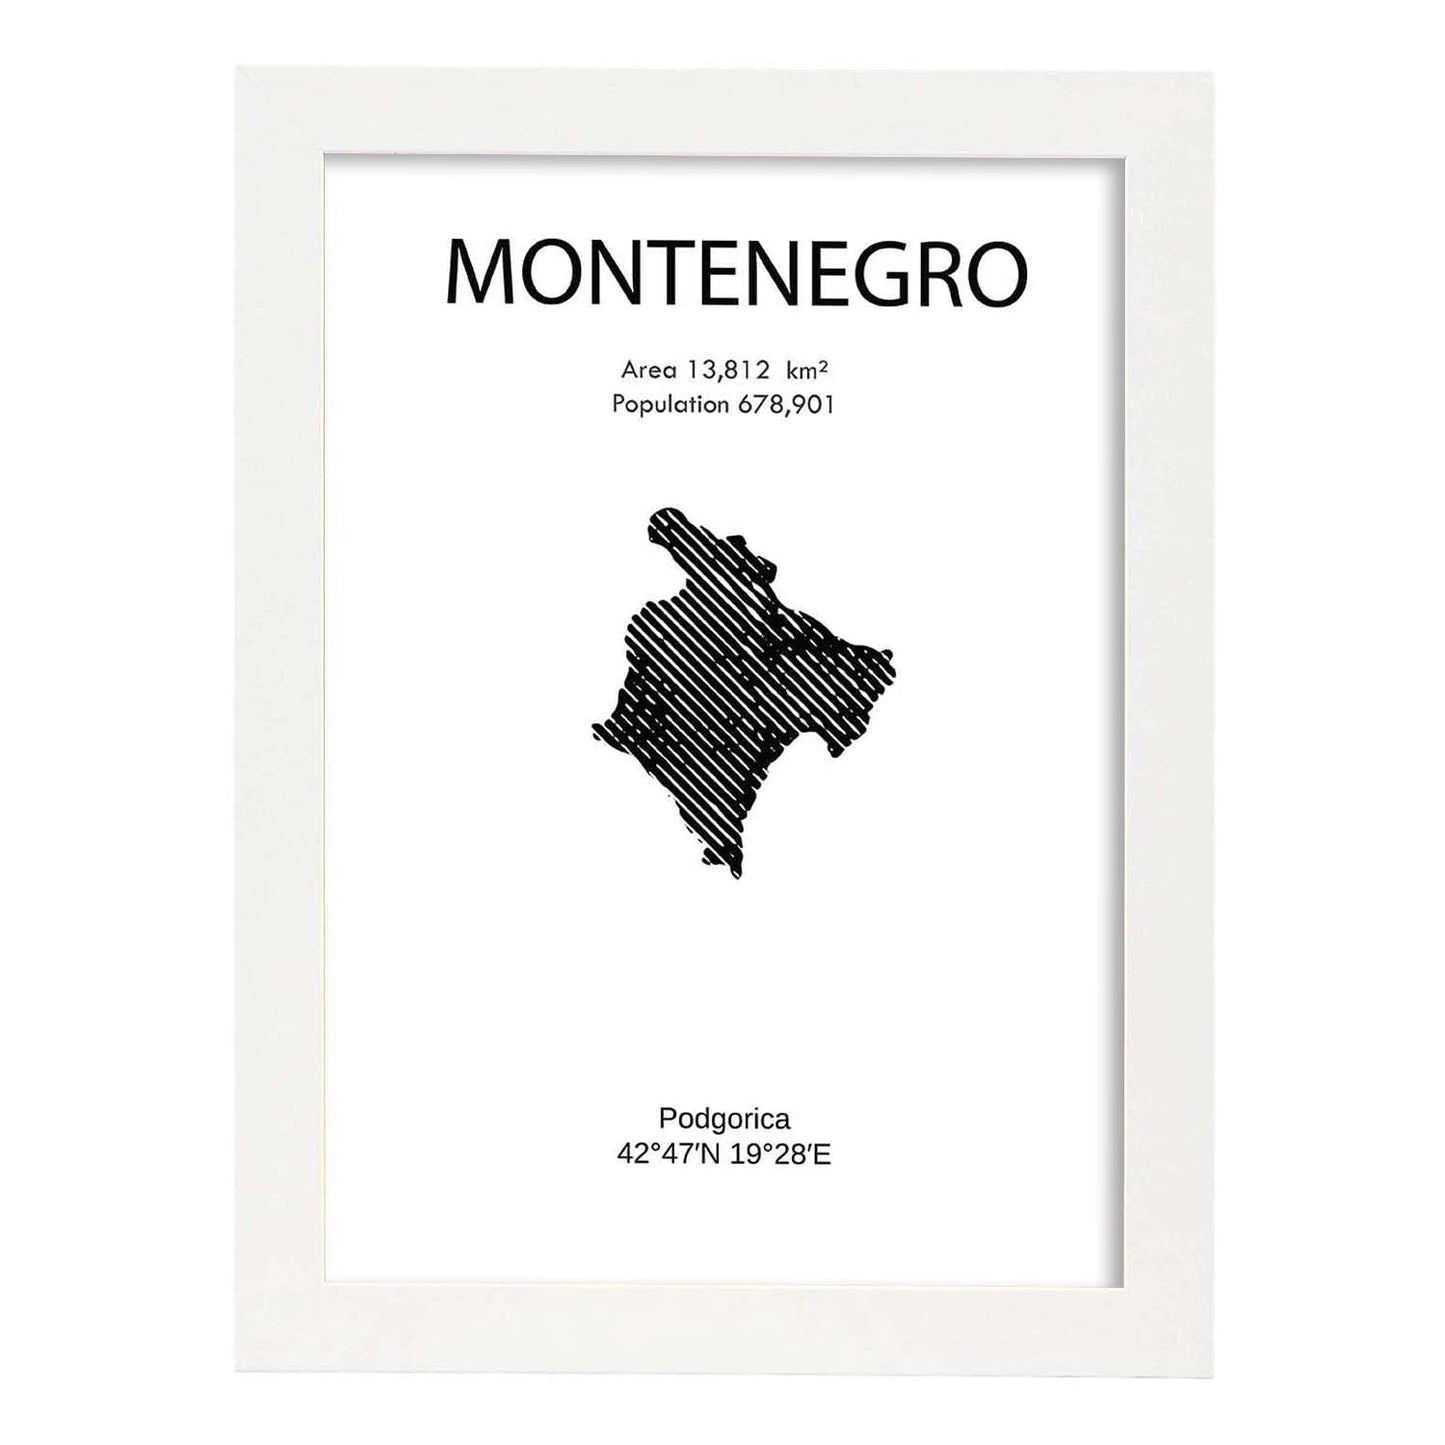 Poster de Montenegro. Láminas de paises y continentes del mundo.-Artwork-Nacnic-A4-Marco Blanco-Nacnic Estudio SL